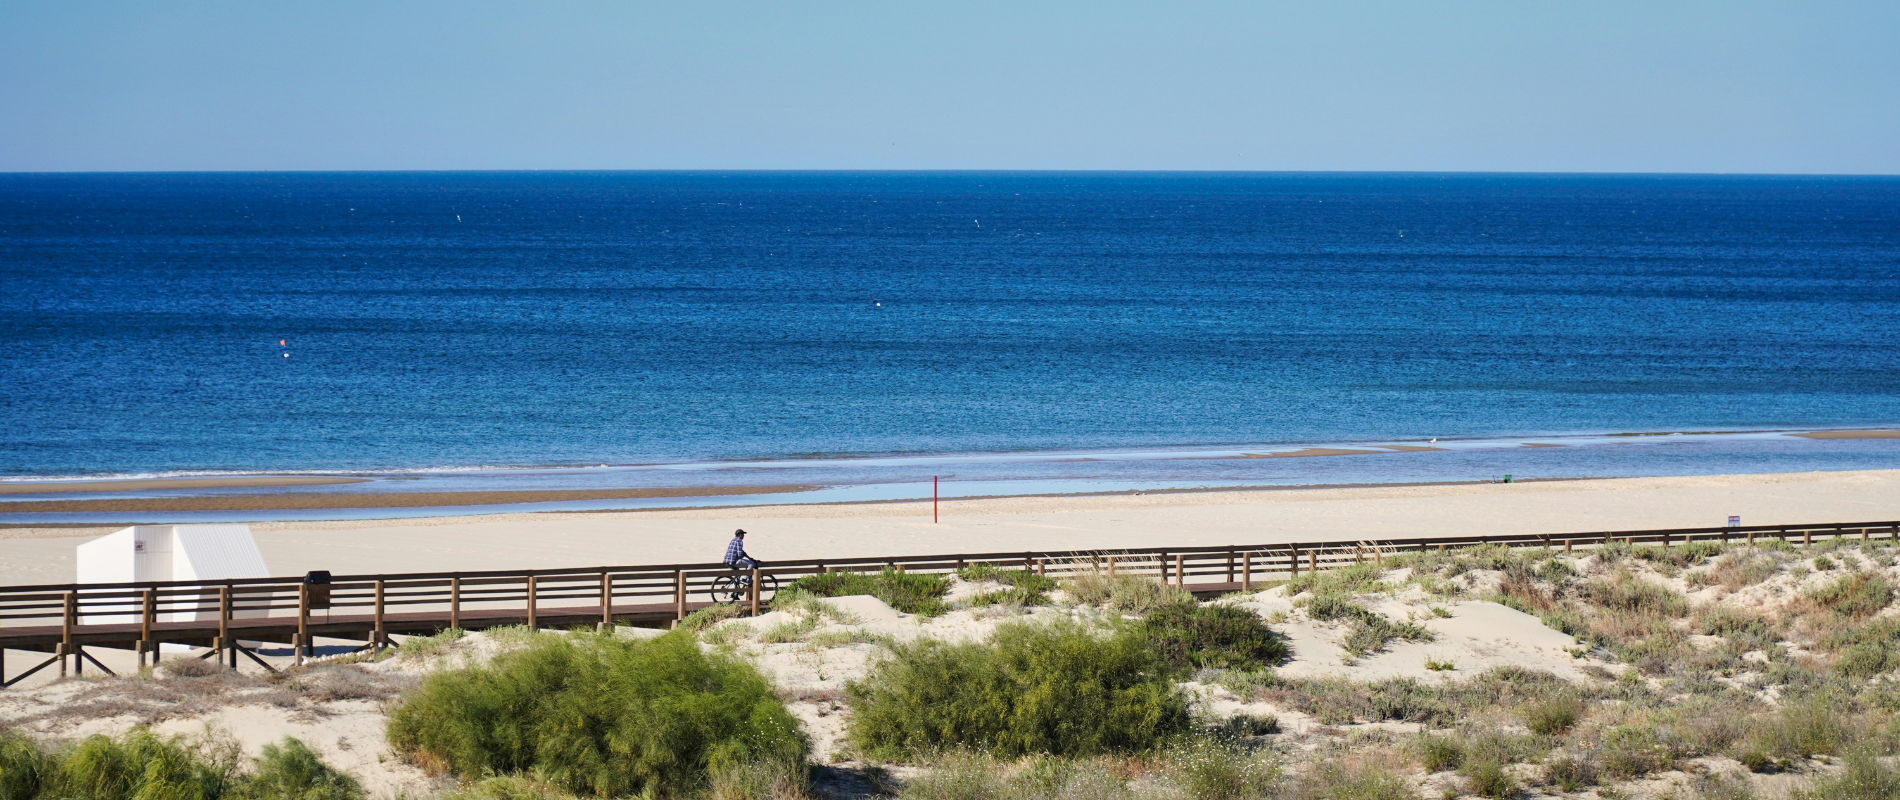 a man riding a bike on a boardwalk overlooking the ocean